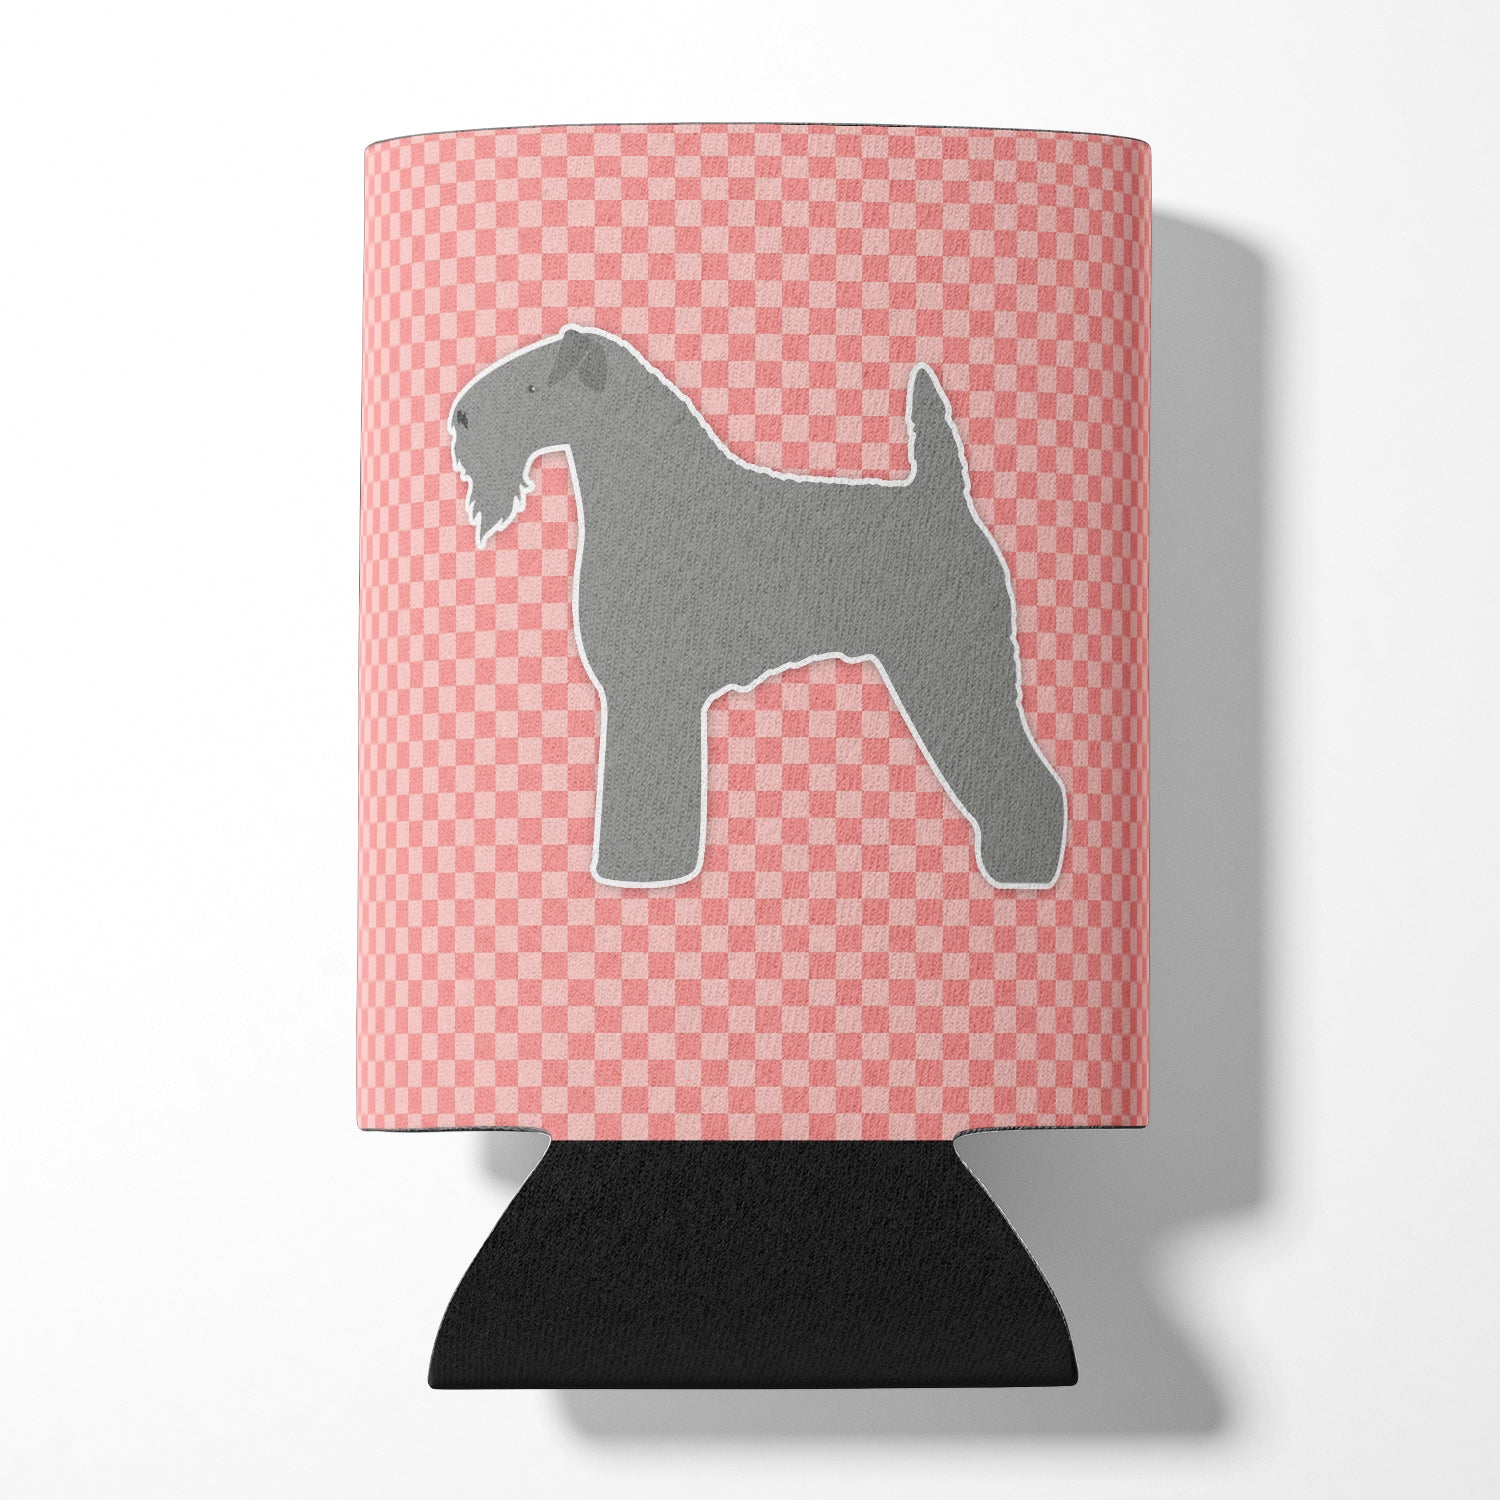 Kerry Blue Terrier Checkerboard Rose Porte-canette ou porte-bouteille BB3592CC